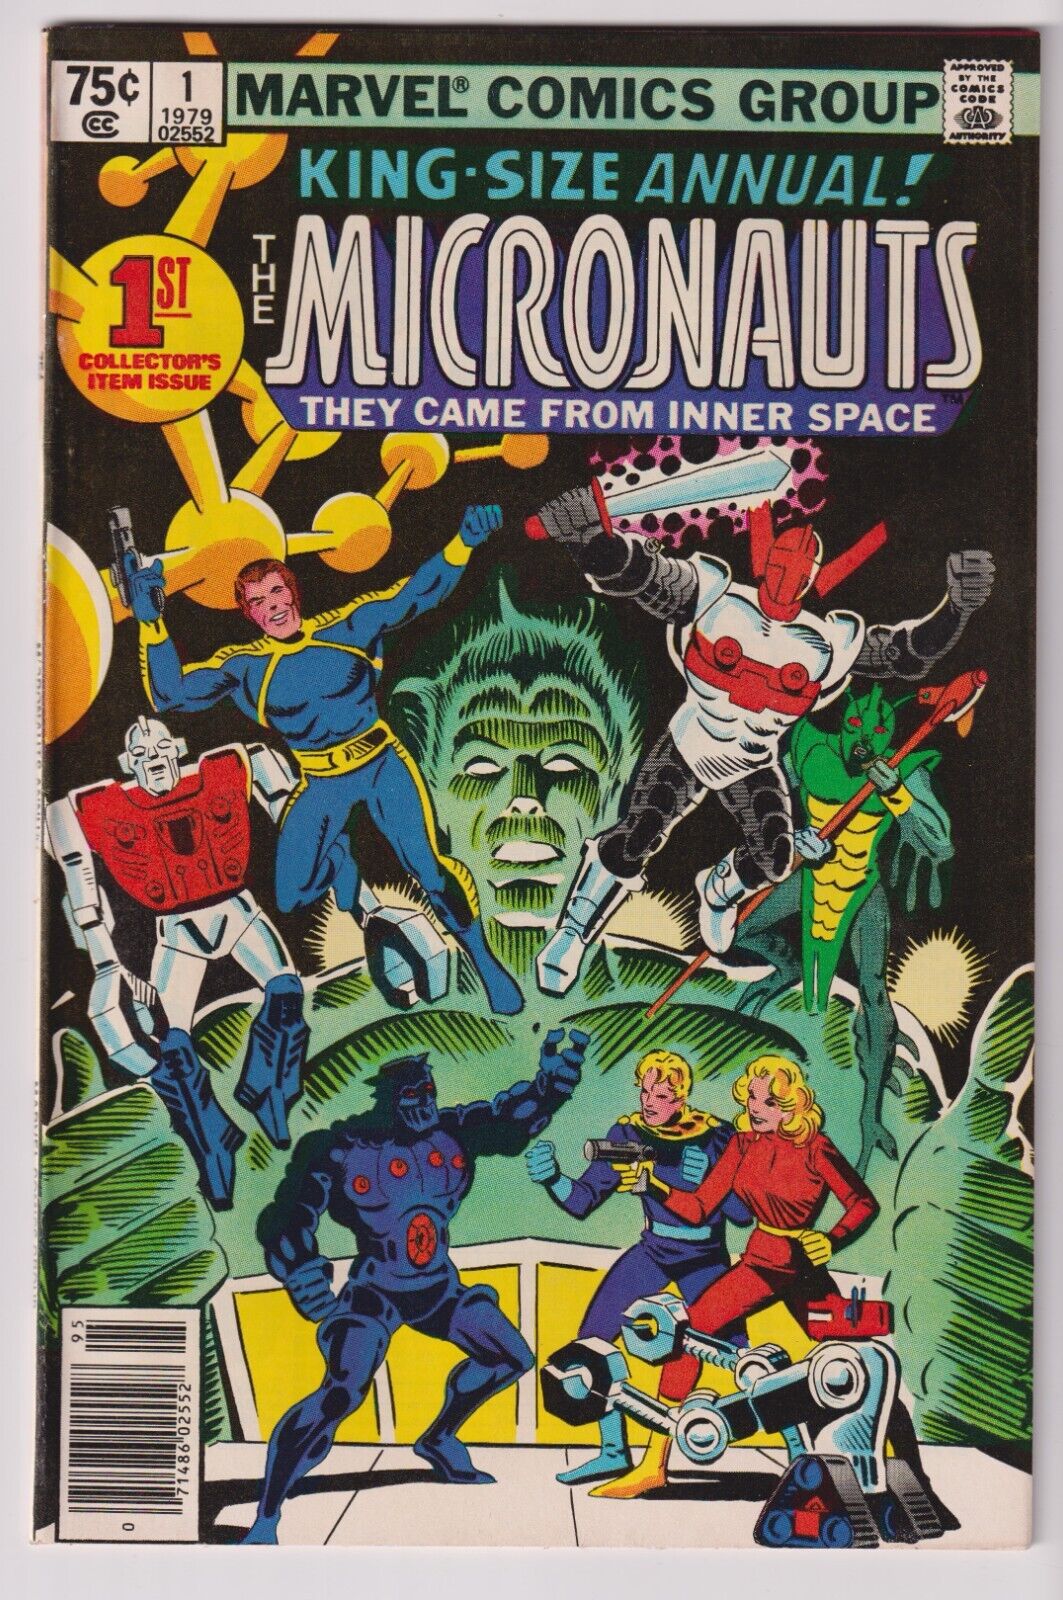 1979 MARVEL COMICS MICRONAUTS ANNUAL #1 IN VF/NM CONDITION